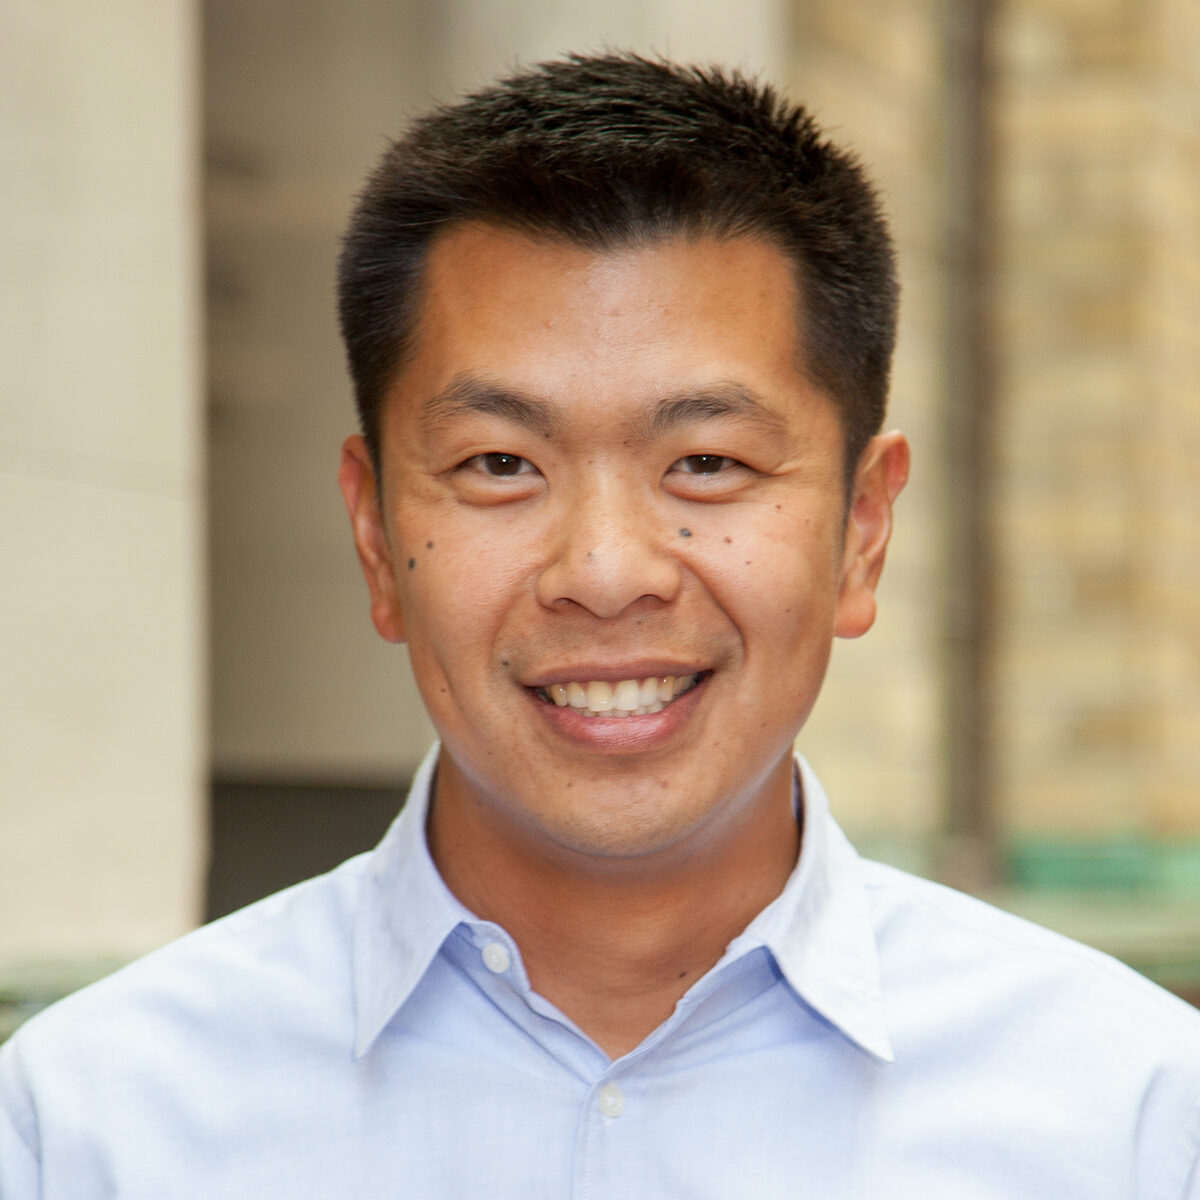 Professor Alan Chong wearing a pale blue dress shirt and smiling to camera